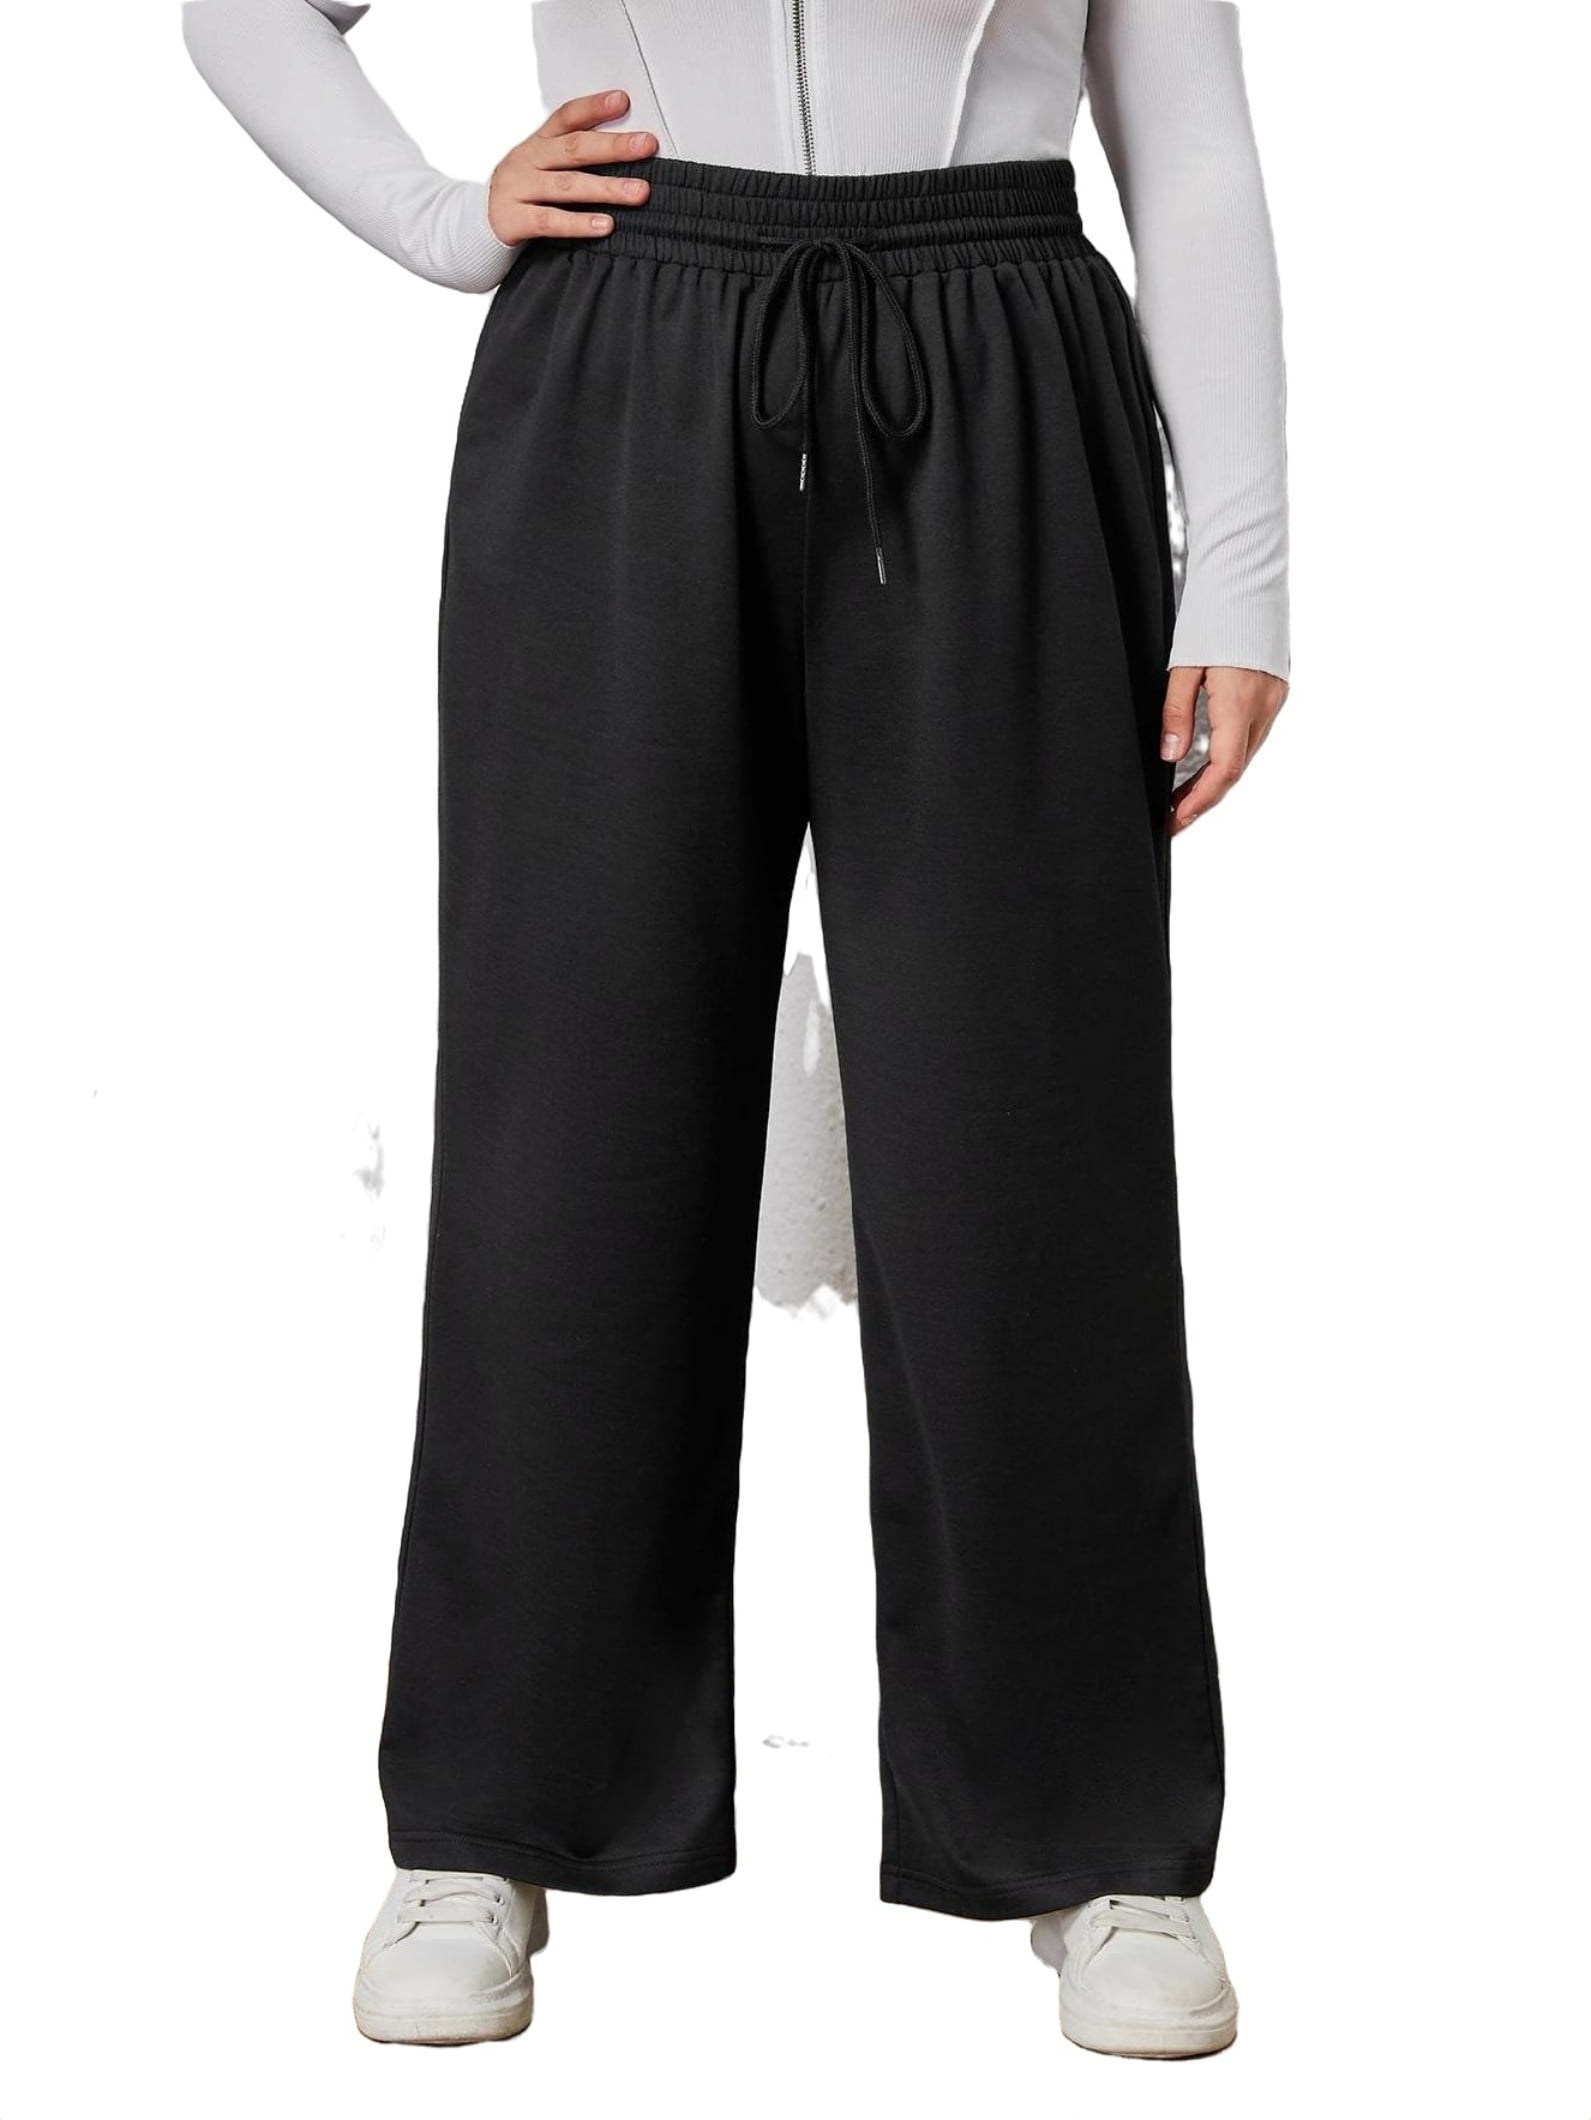 Straight Leg Black Plus Size Sweatpants (Women's) - Walmart.com